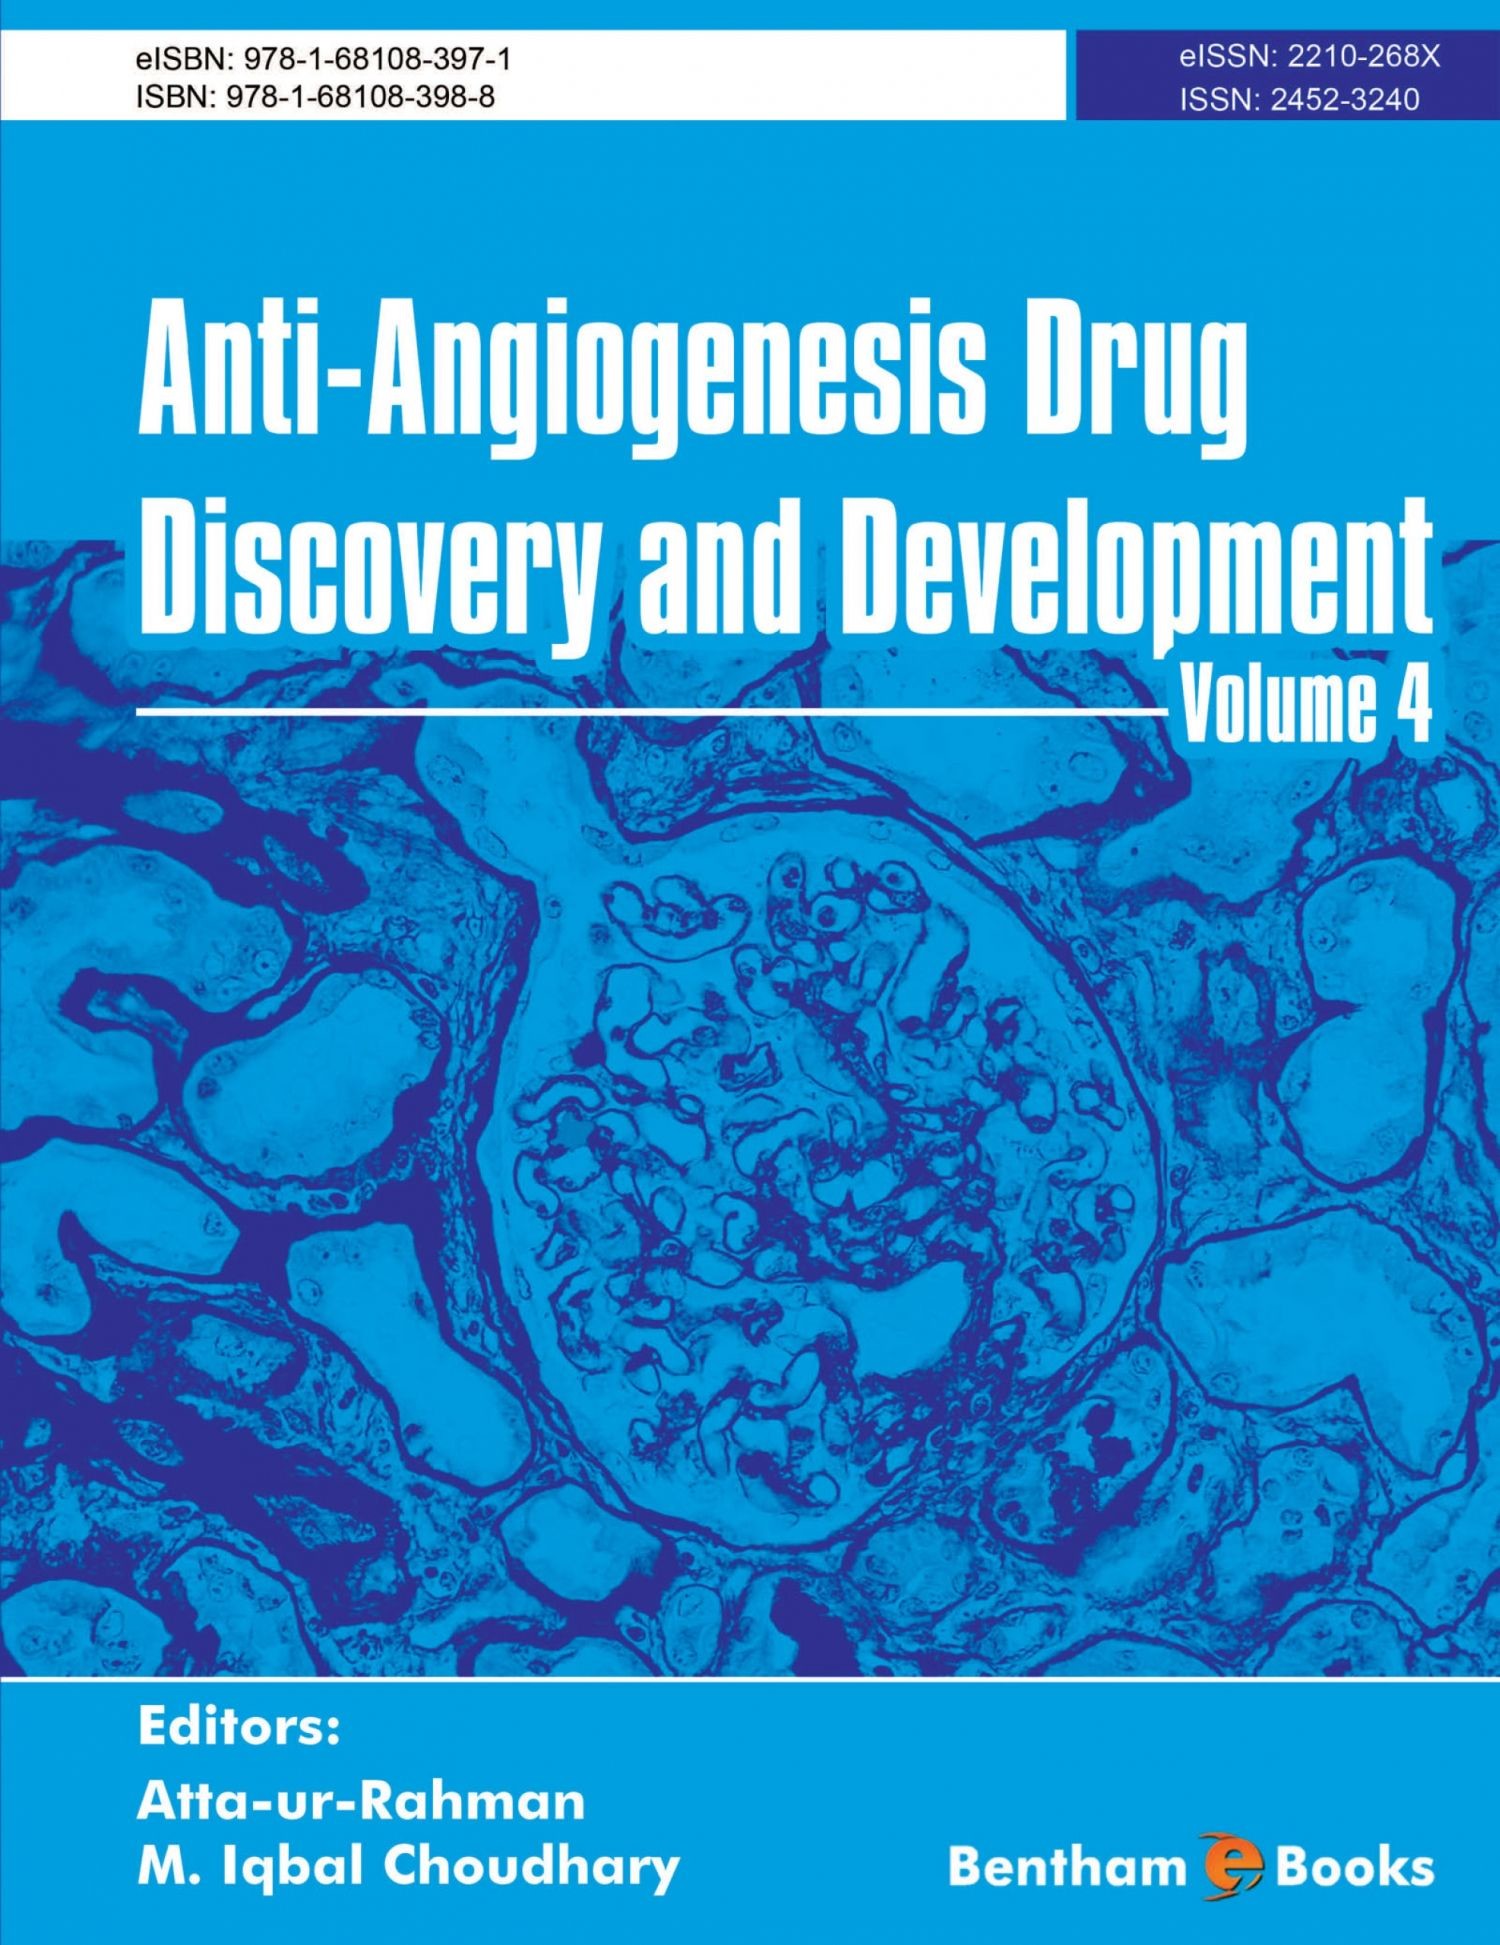 Anti-Angiogenesis Drug Discovery and Development: Volume 4